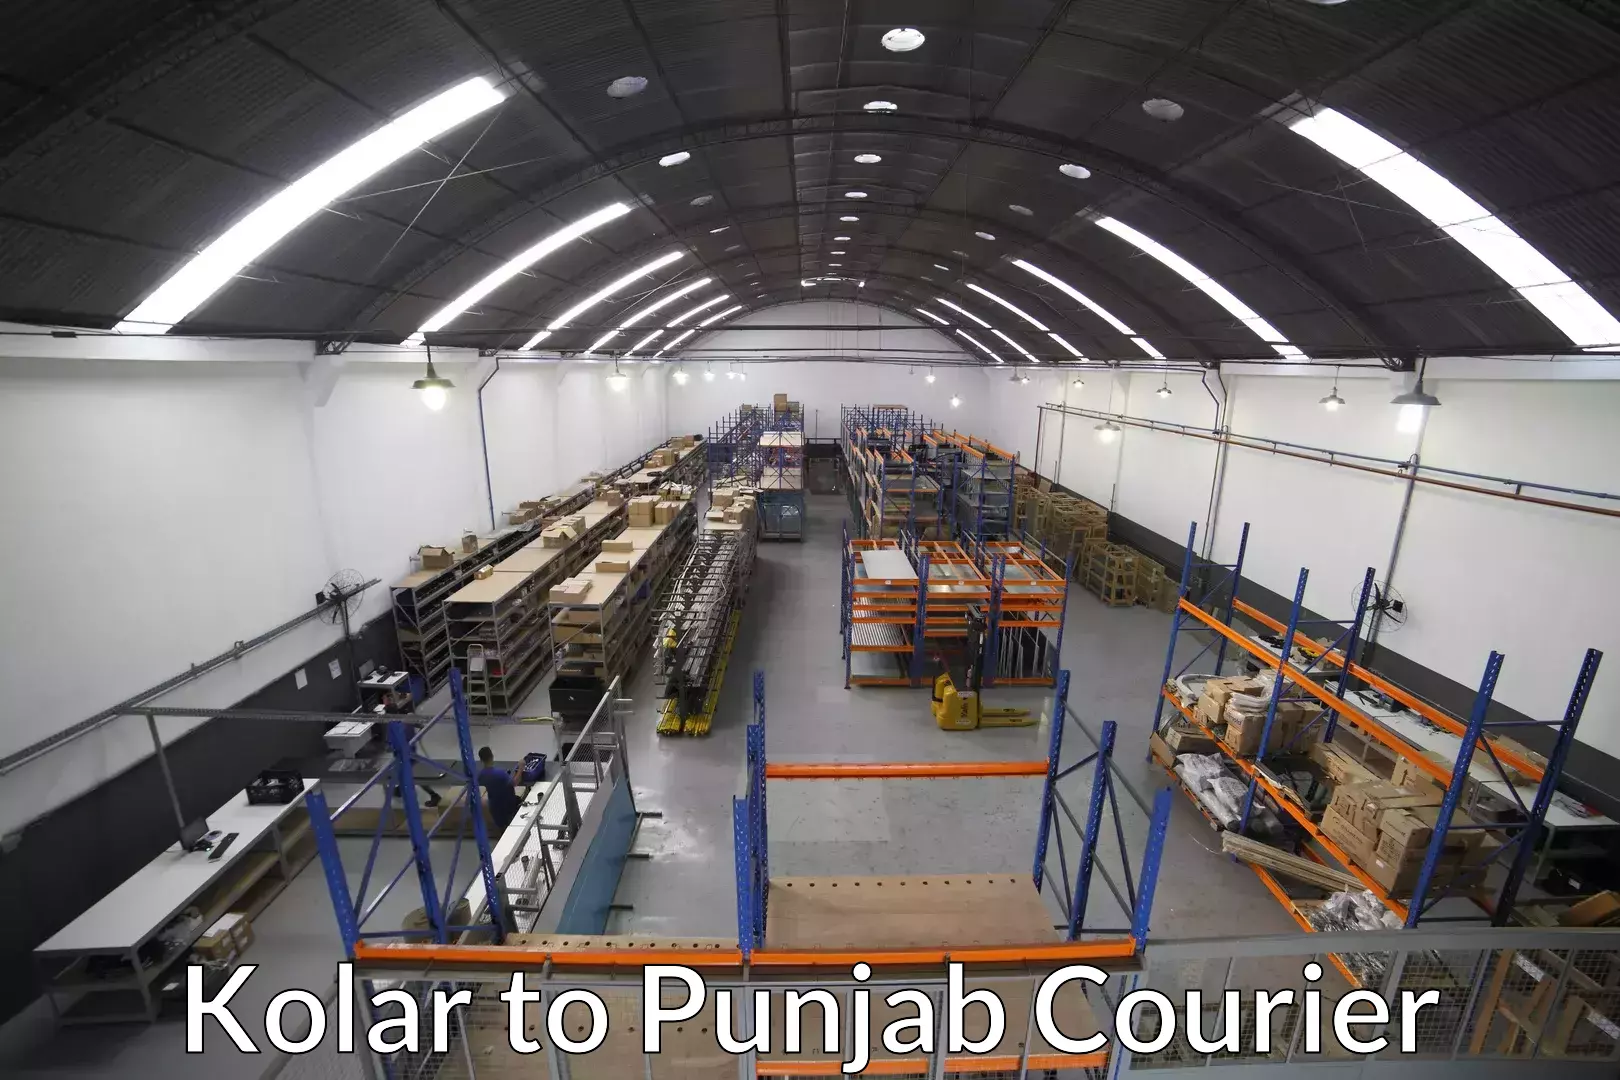 Trusted moving company Kolar to Punjab